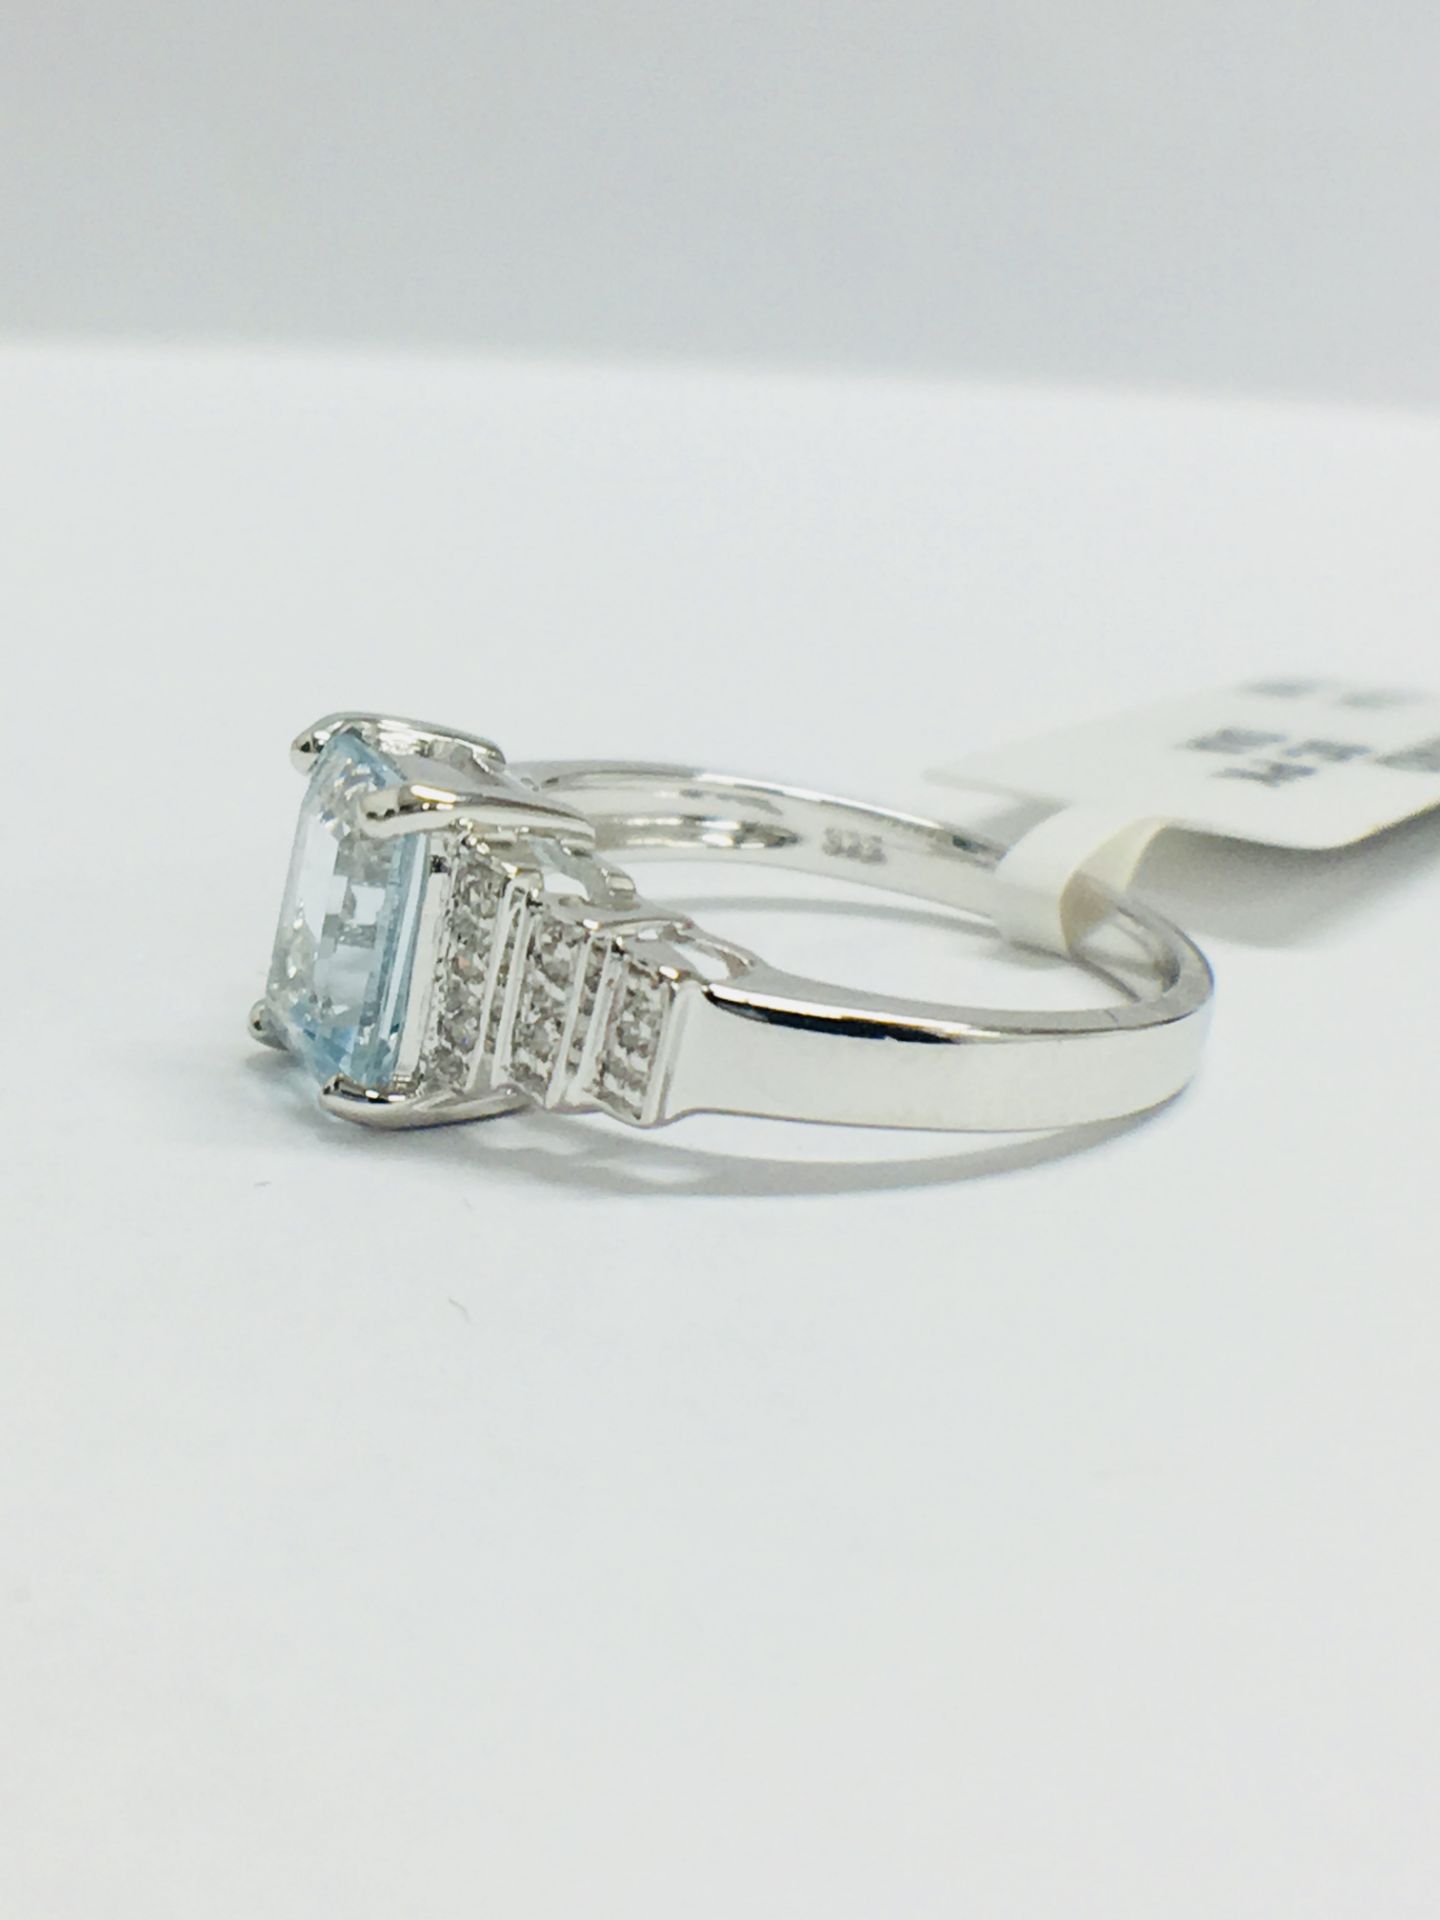 9ct White Gold Aquamarine Diamond Ring - Image 3 of 13